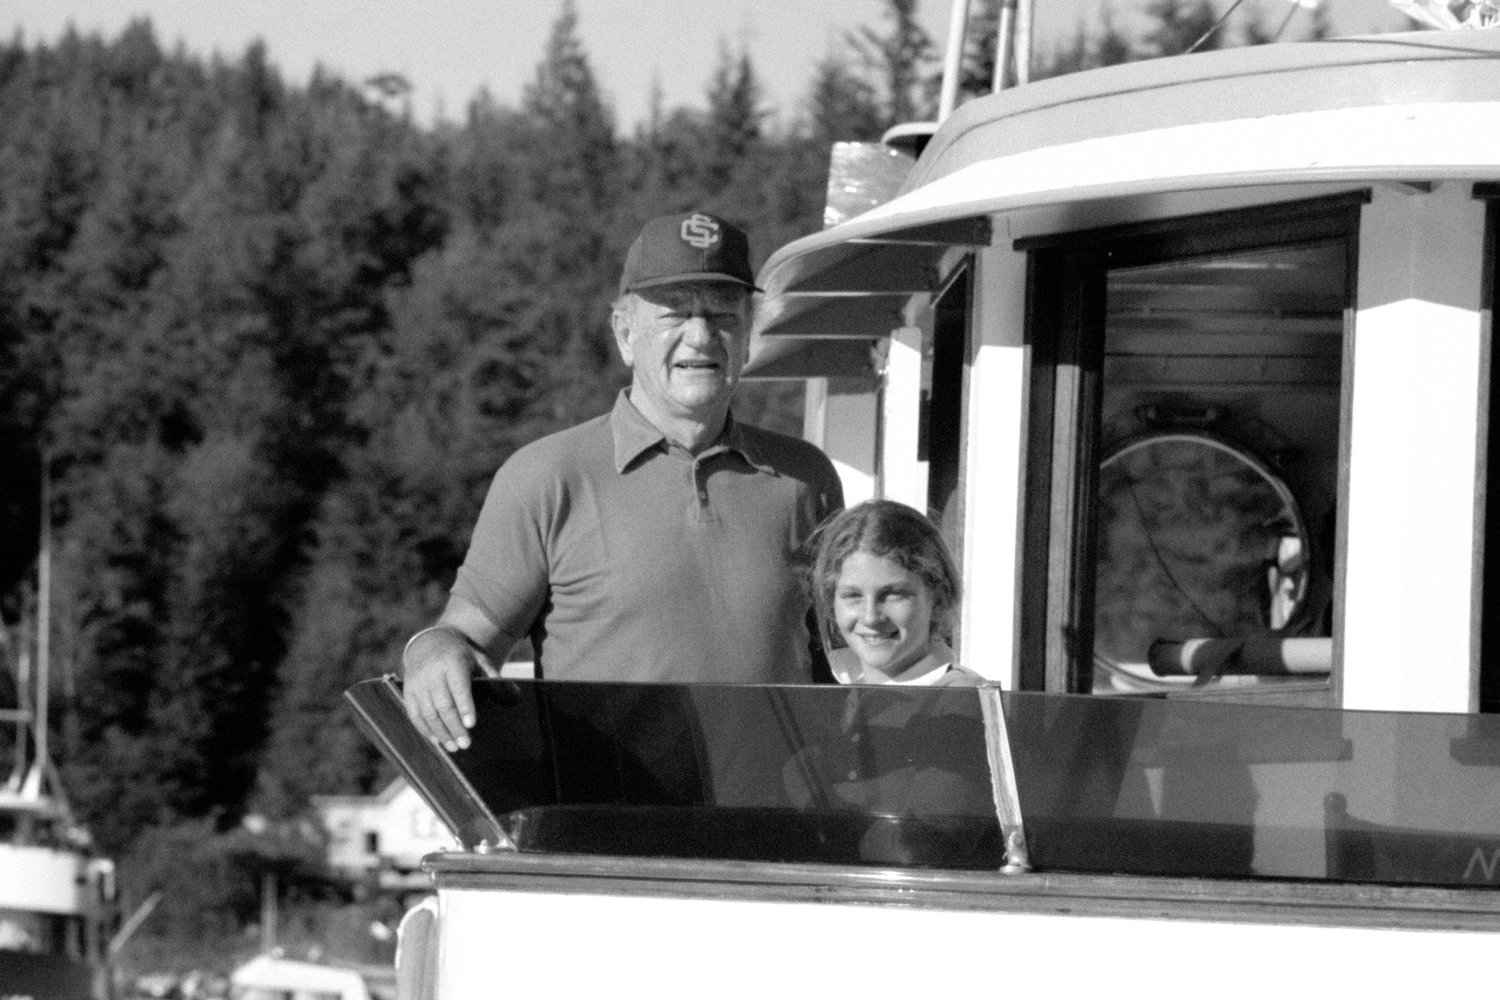 John Wayne and Marisa Wayne aboard Duke’s boat the Wild Goose in the Pacific Northwest. Photo courtesy of John Wayne Enterprises